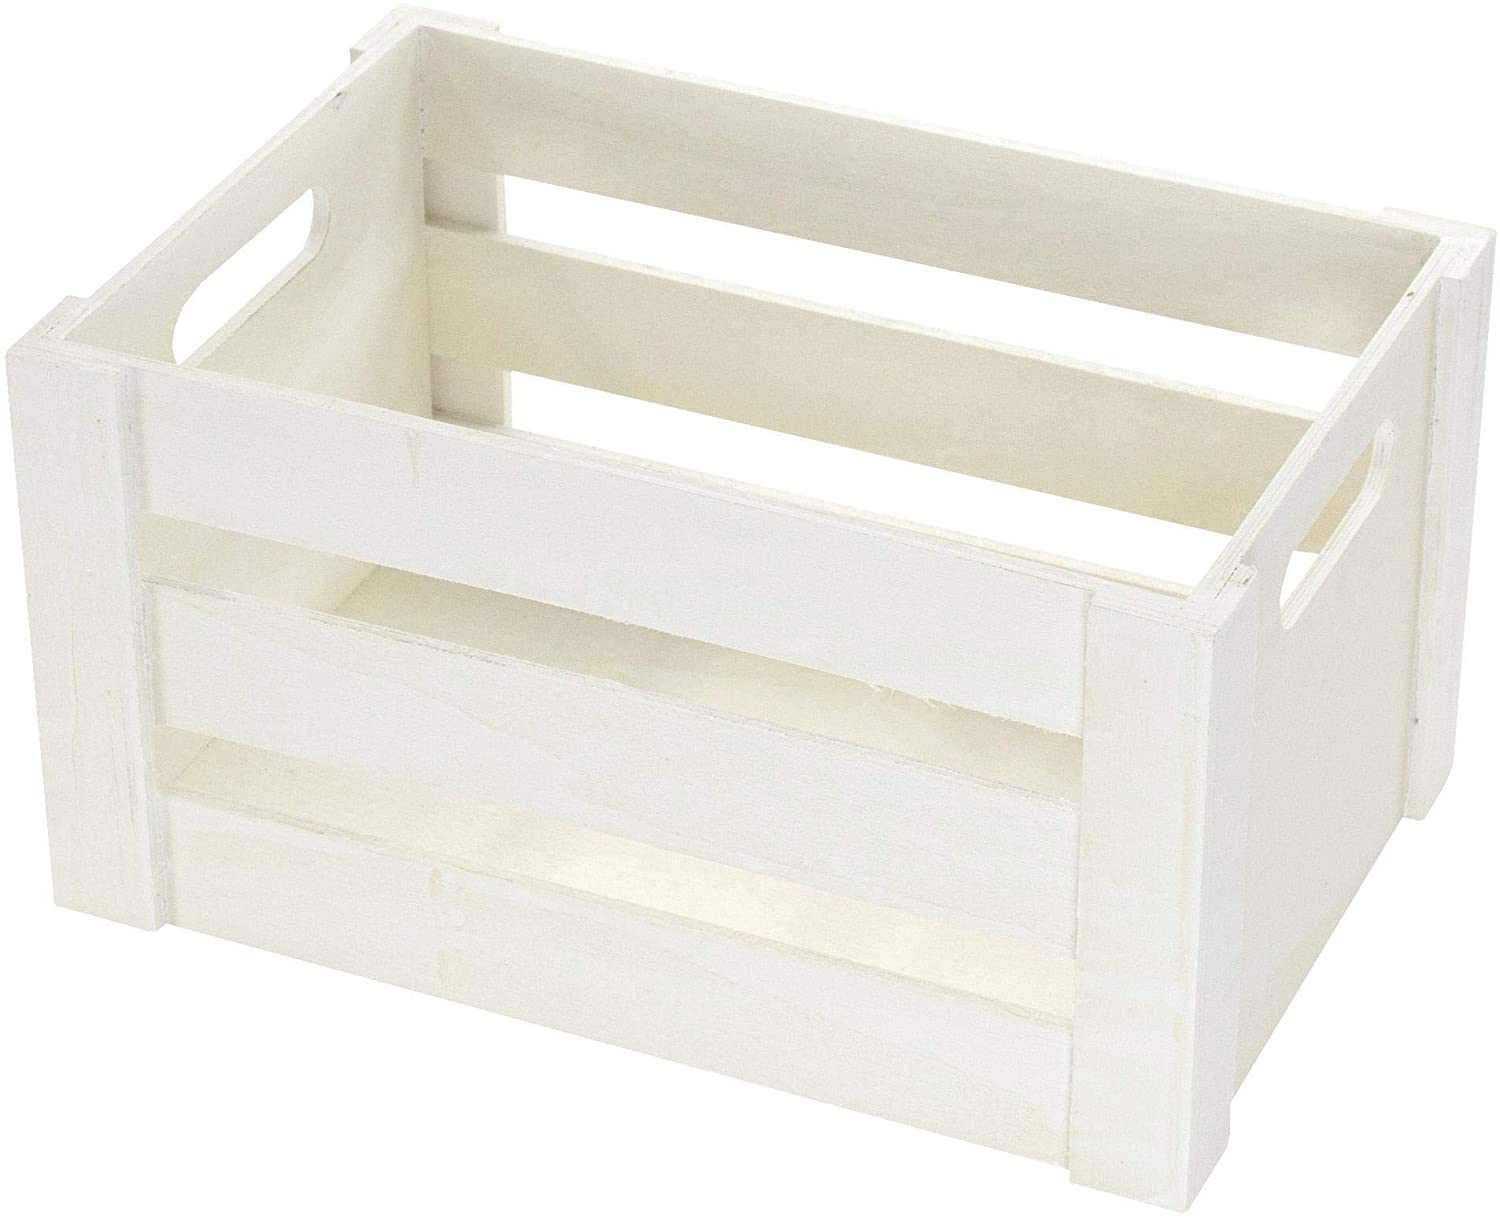 Daro Deko Wooden Box With Handles White